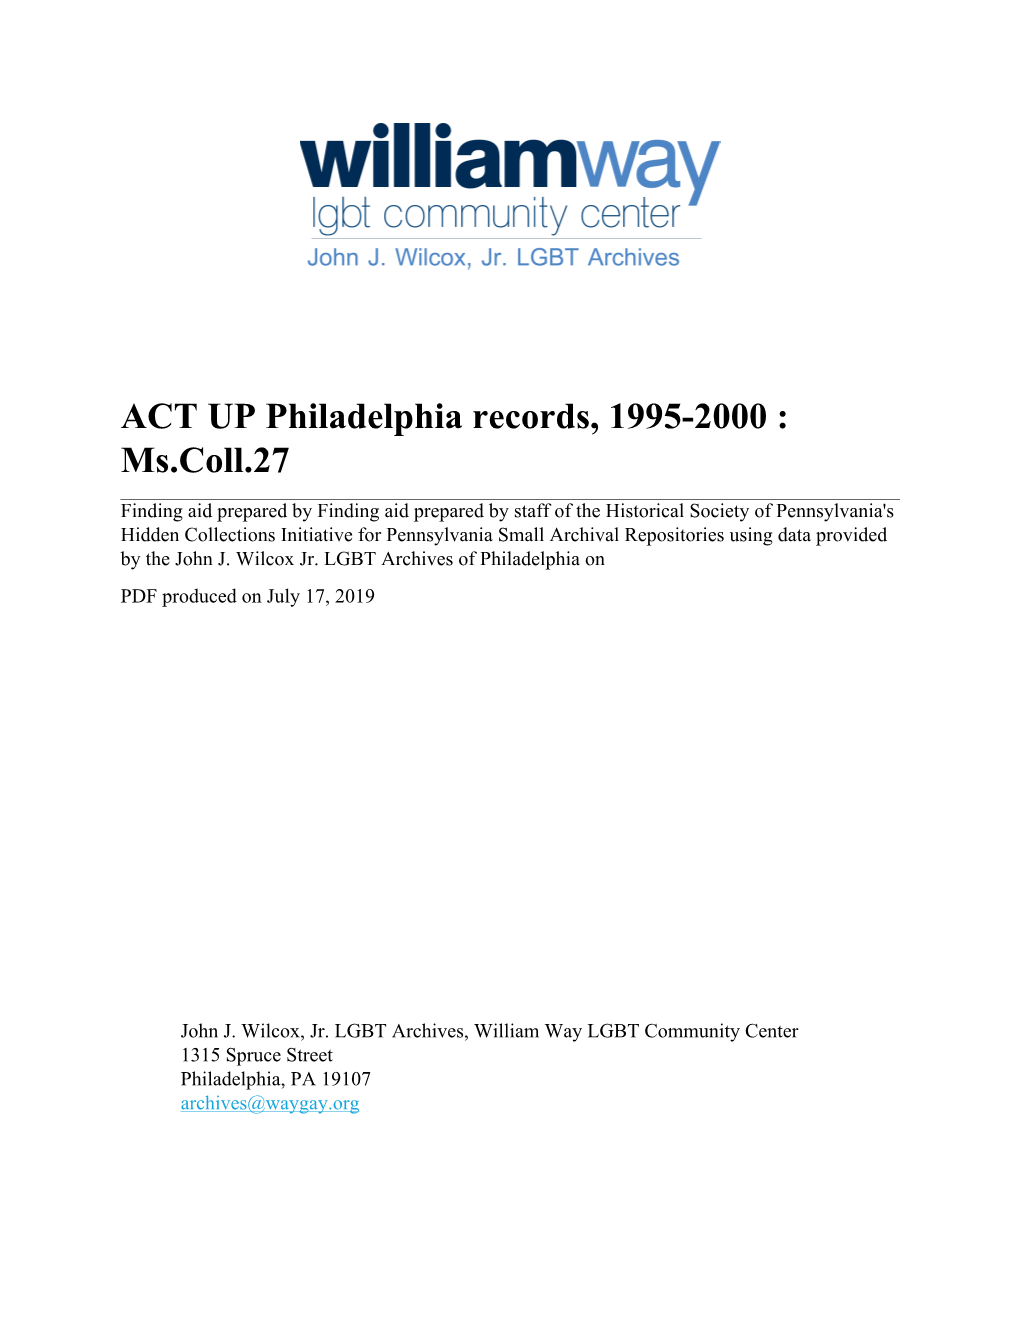 ACT up Philadelphia Records, 1995-2000 : Ms.Coll.27